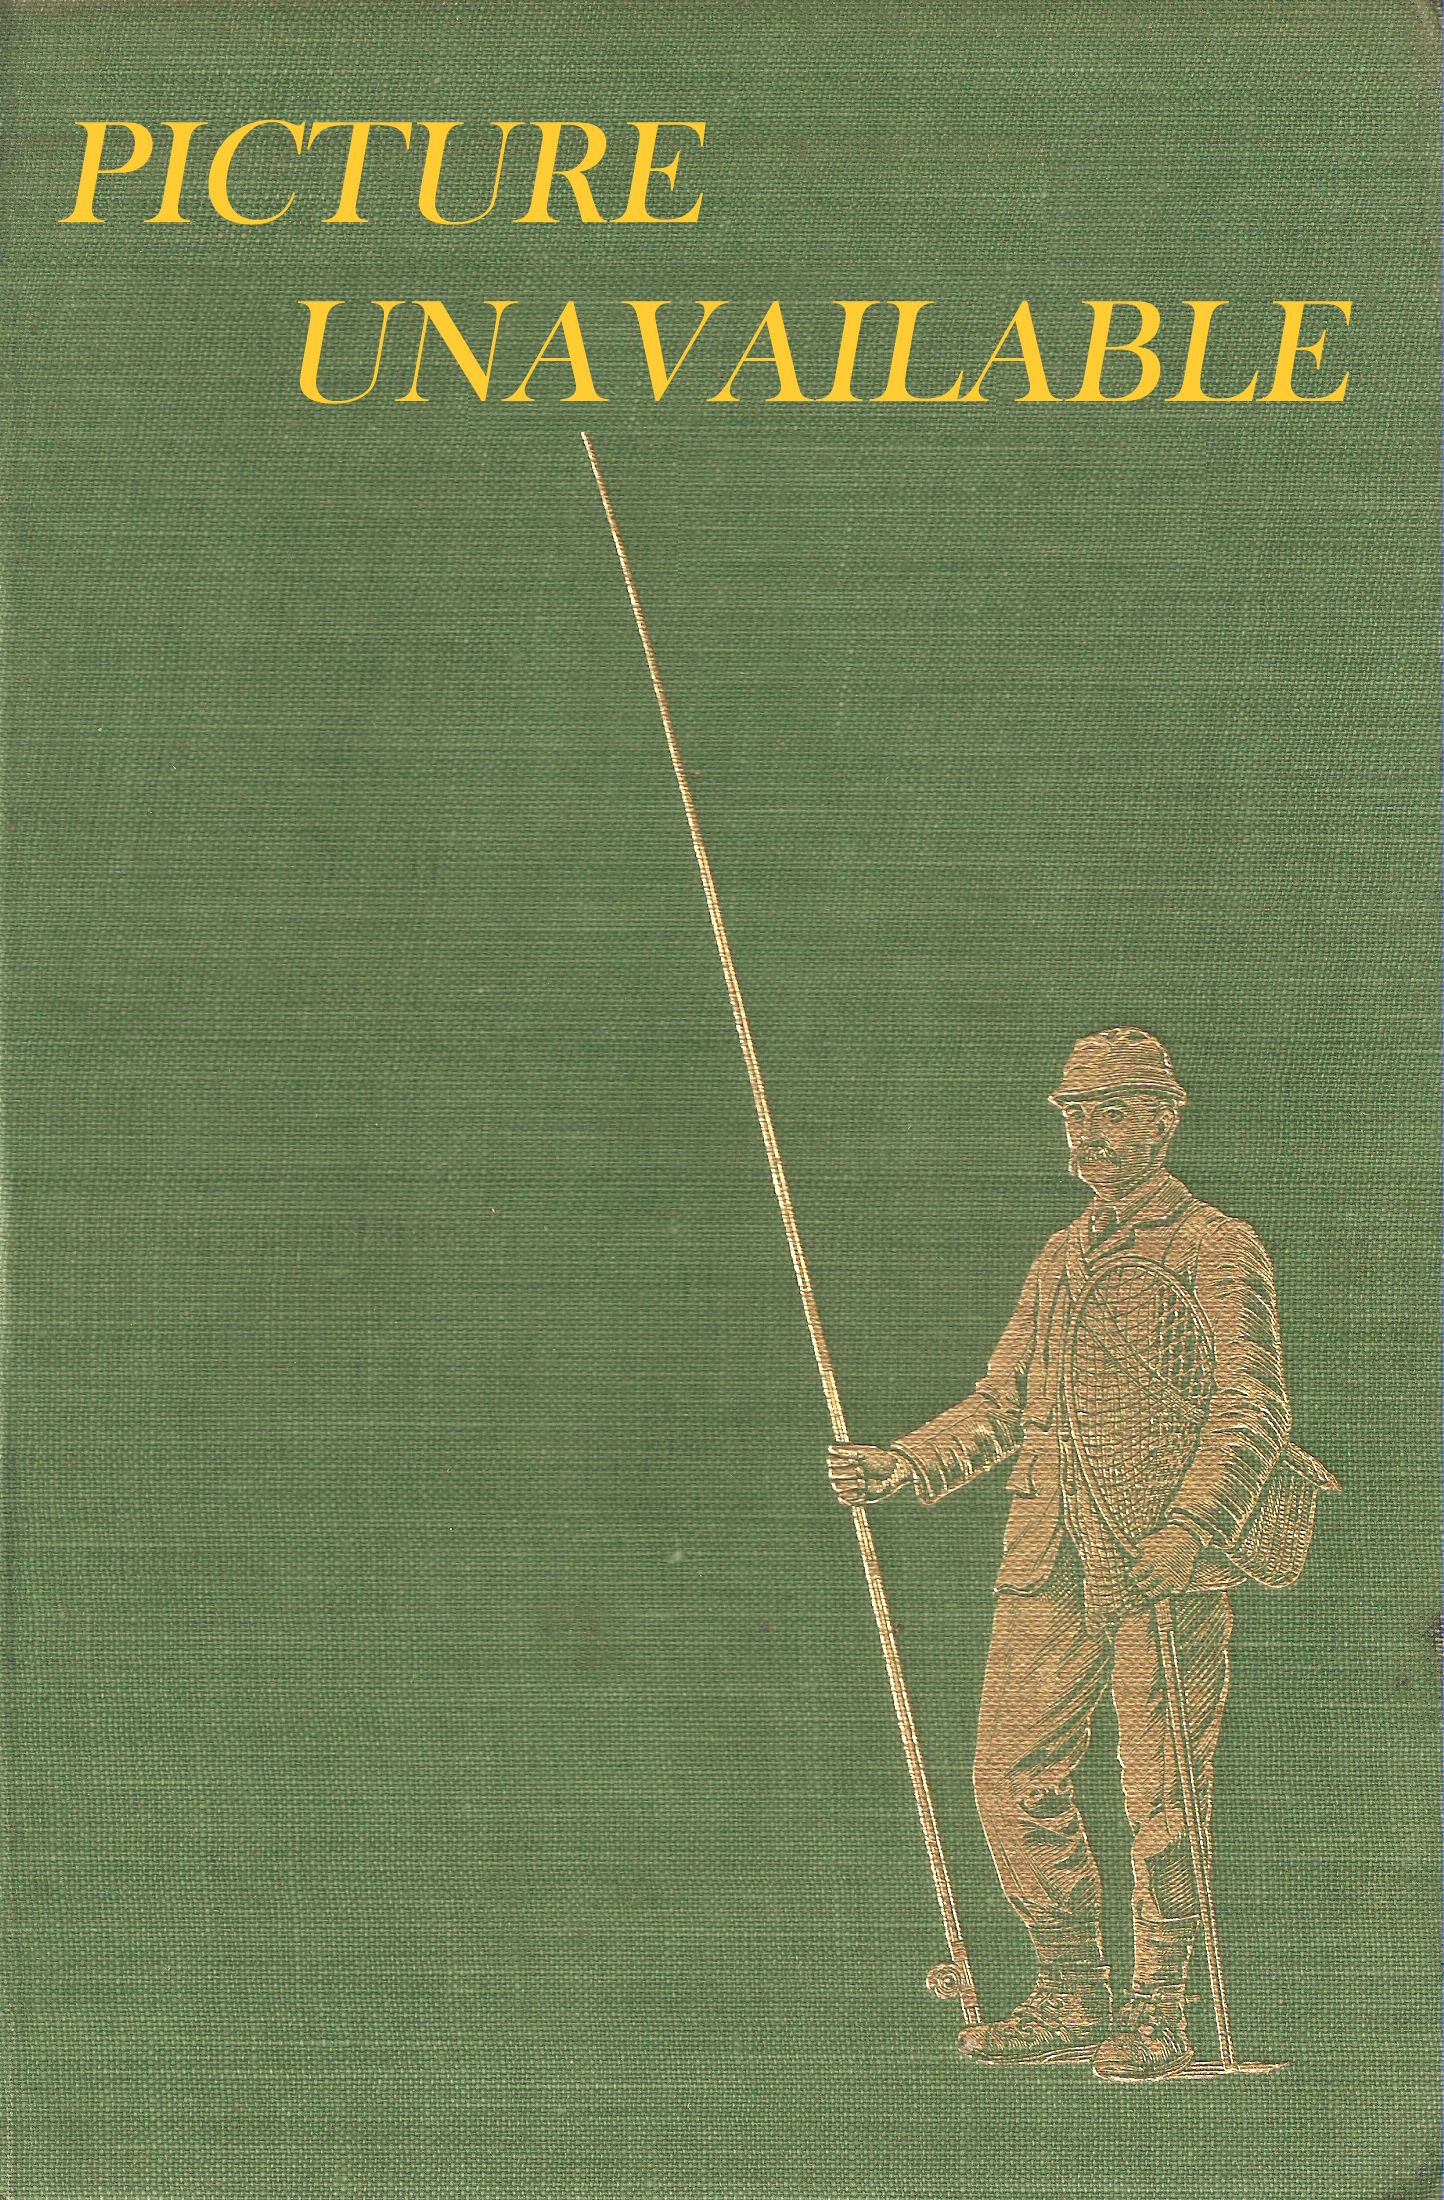 ESTUARY SAGA: A WILDFOWLER NATURALIST ON THE ELBE. By Jeffery G. Harrison.